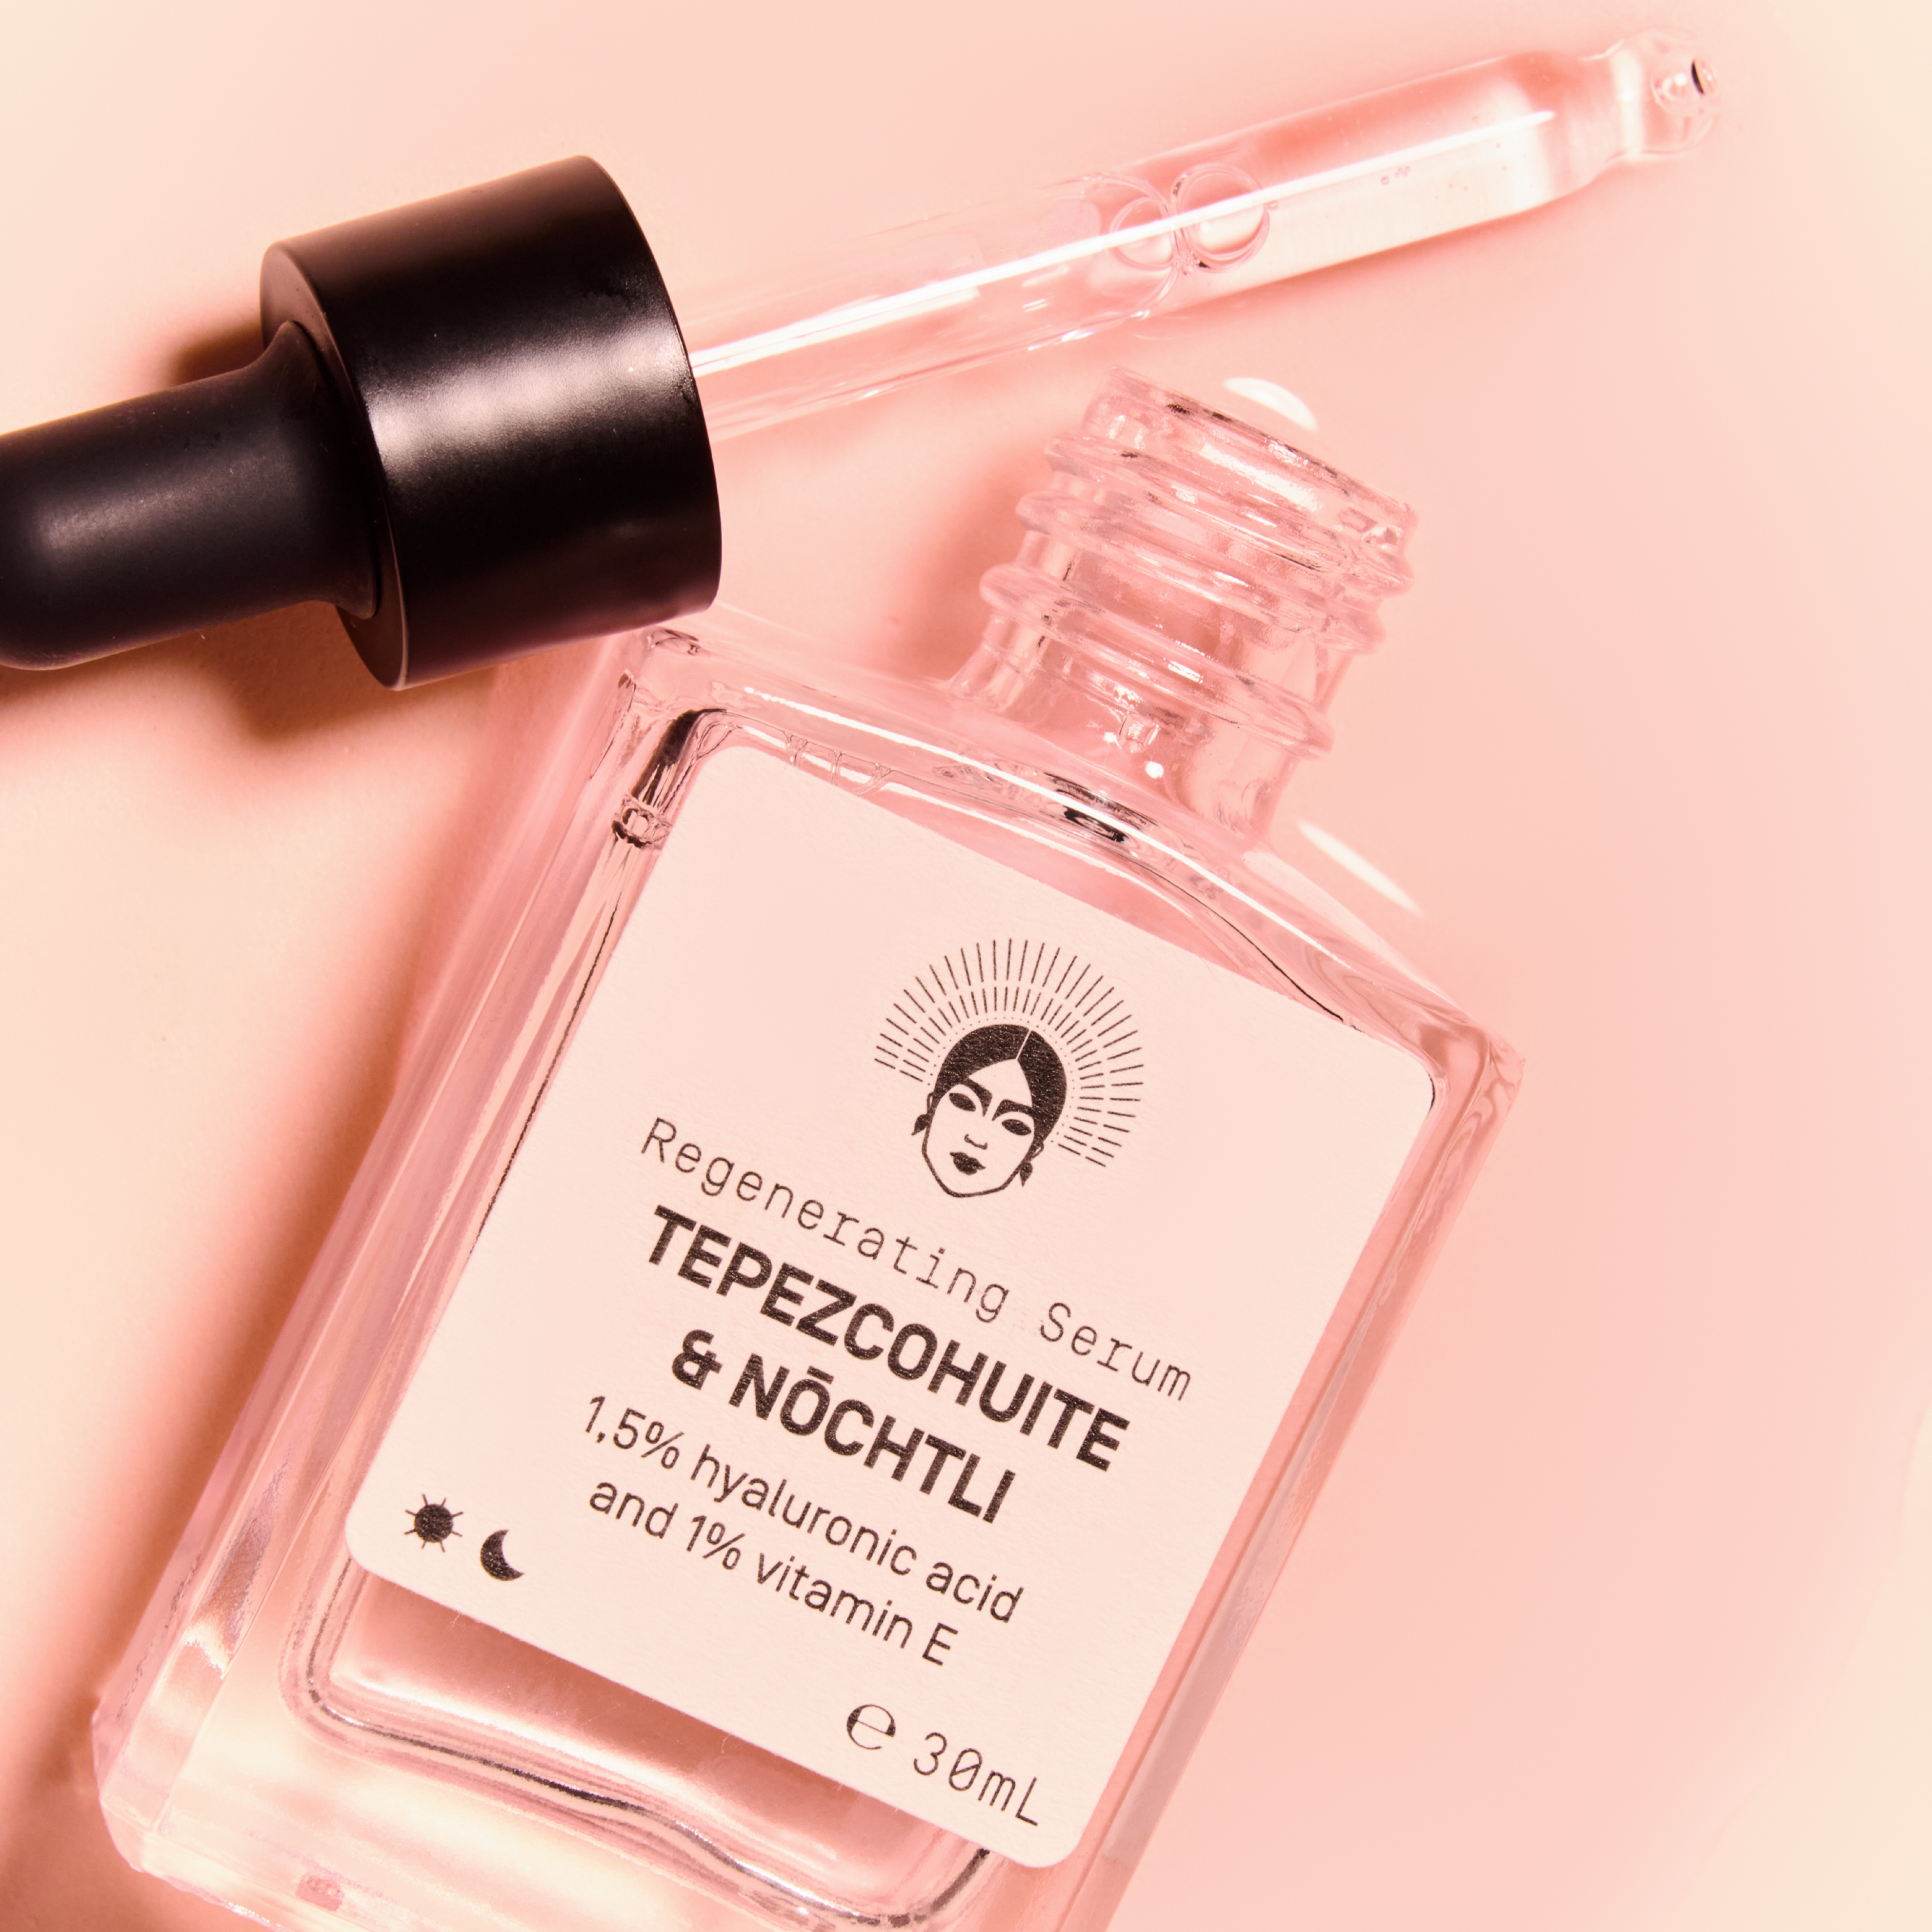 Regenerating Serum - Tepezcohuite & Nōchtli